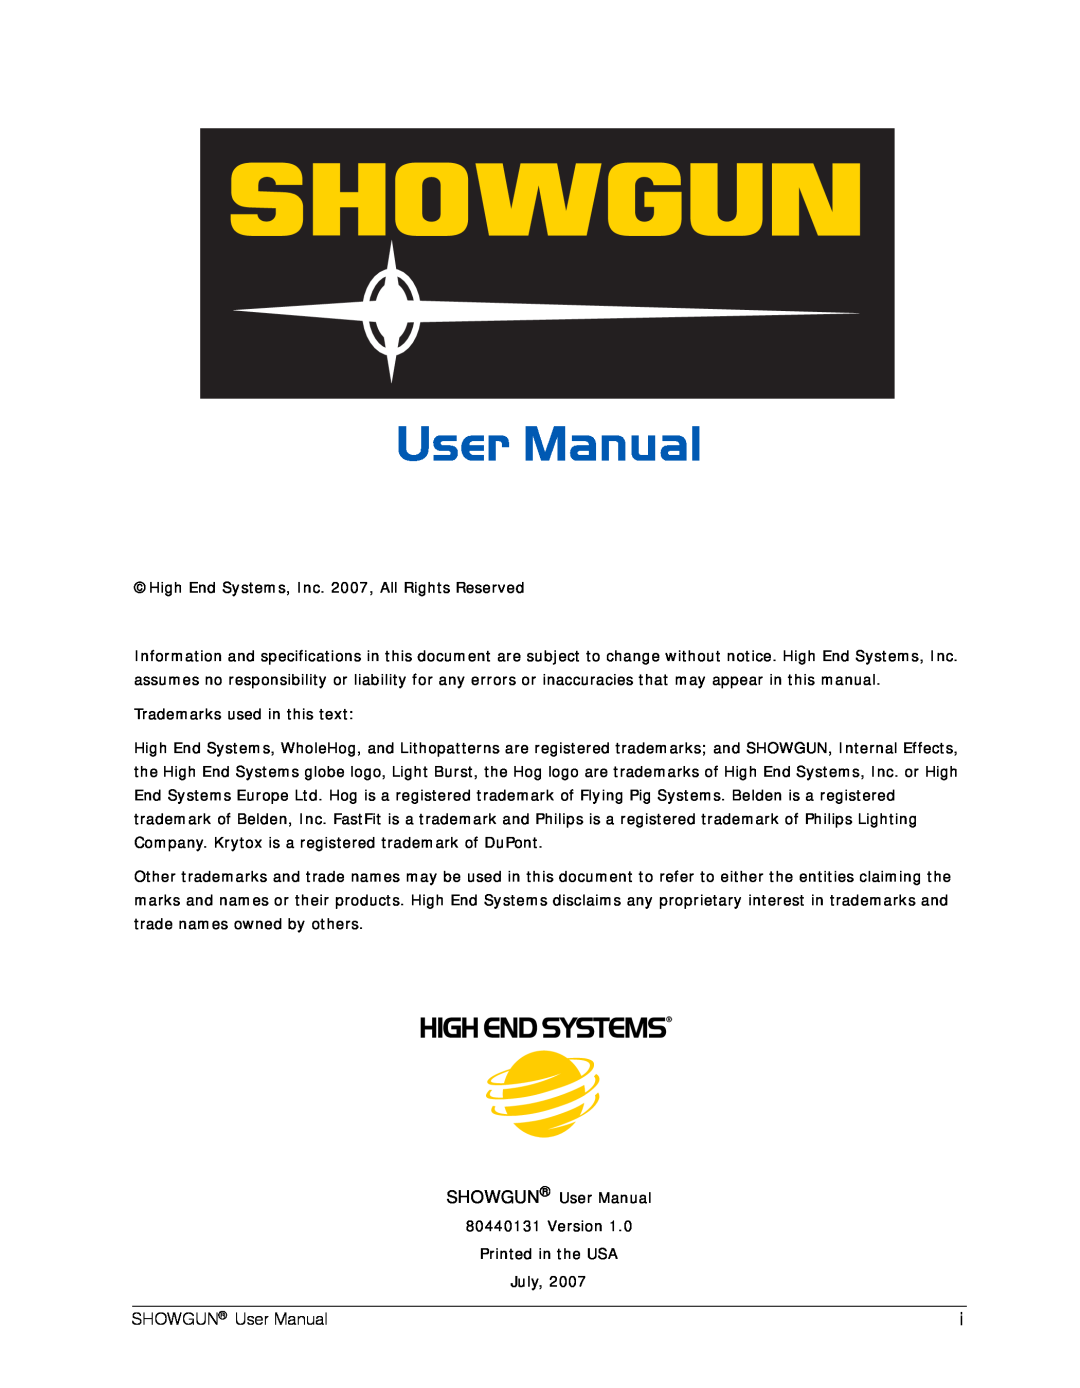 High End Systems SHOWGUN user manual 